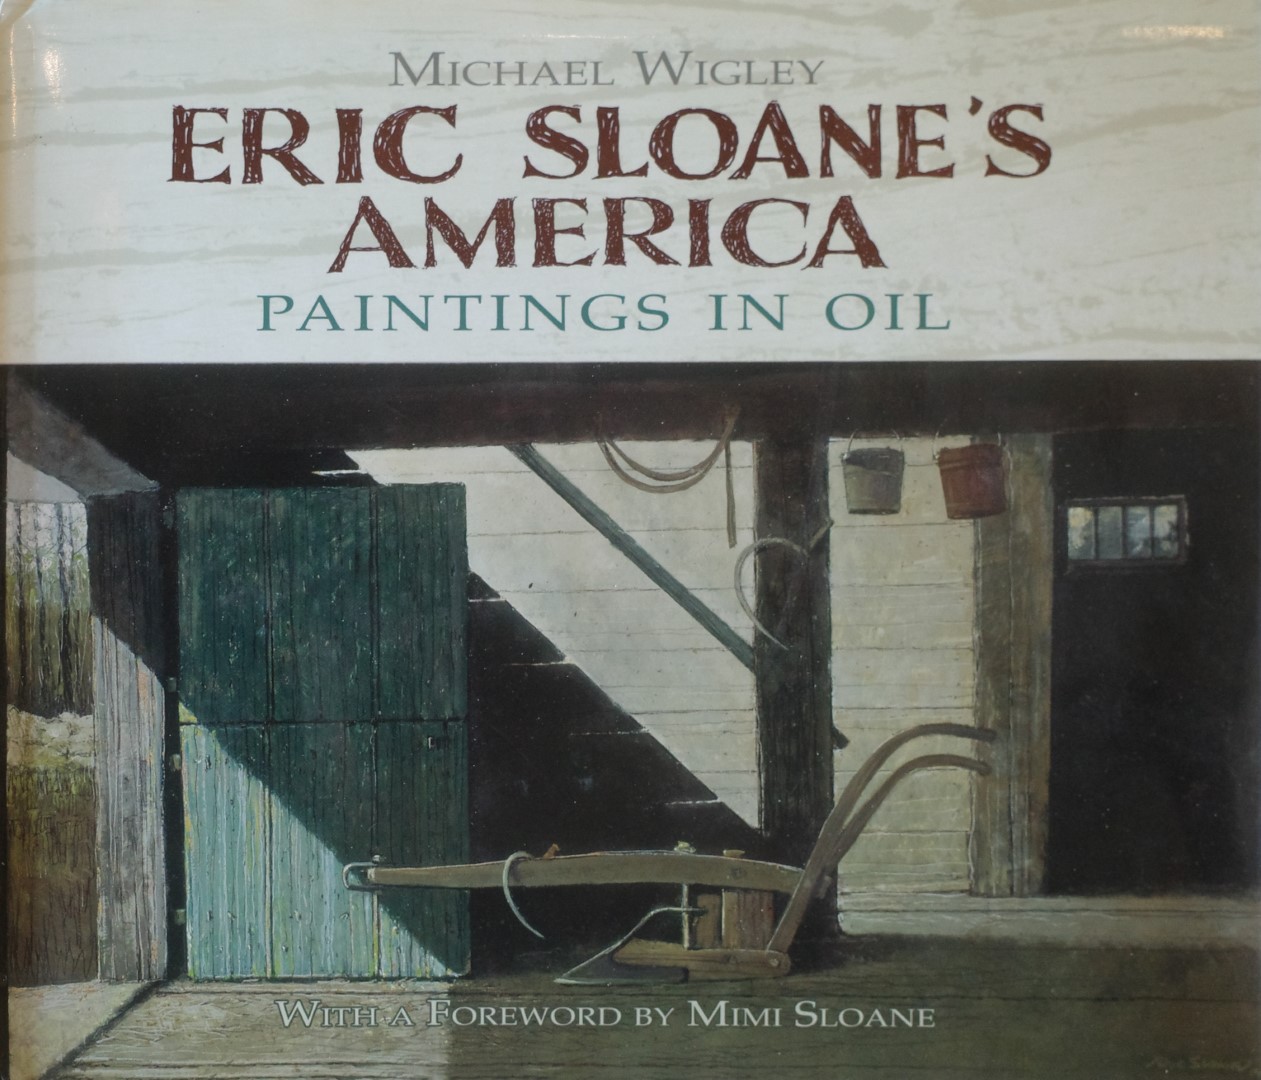 Eric Sloane Book - Michael Wigley - Eric Sloane's America